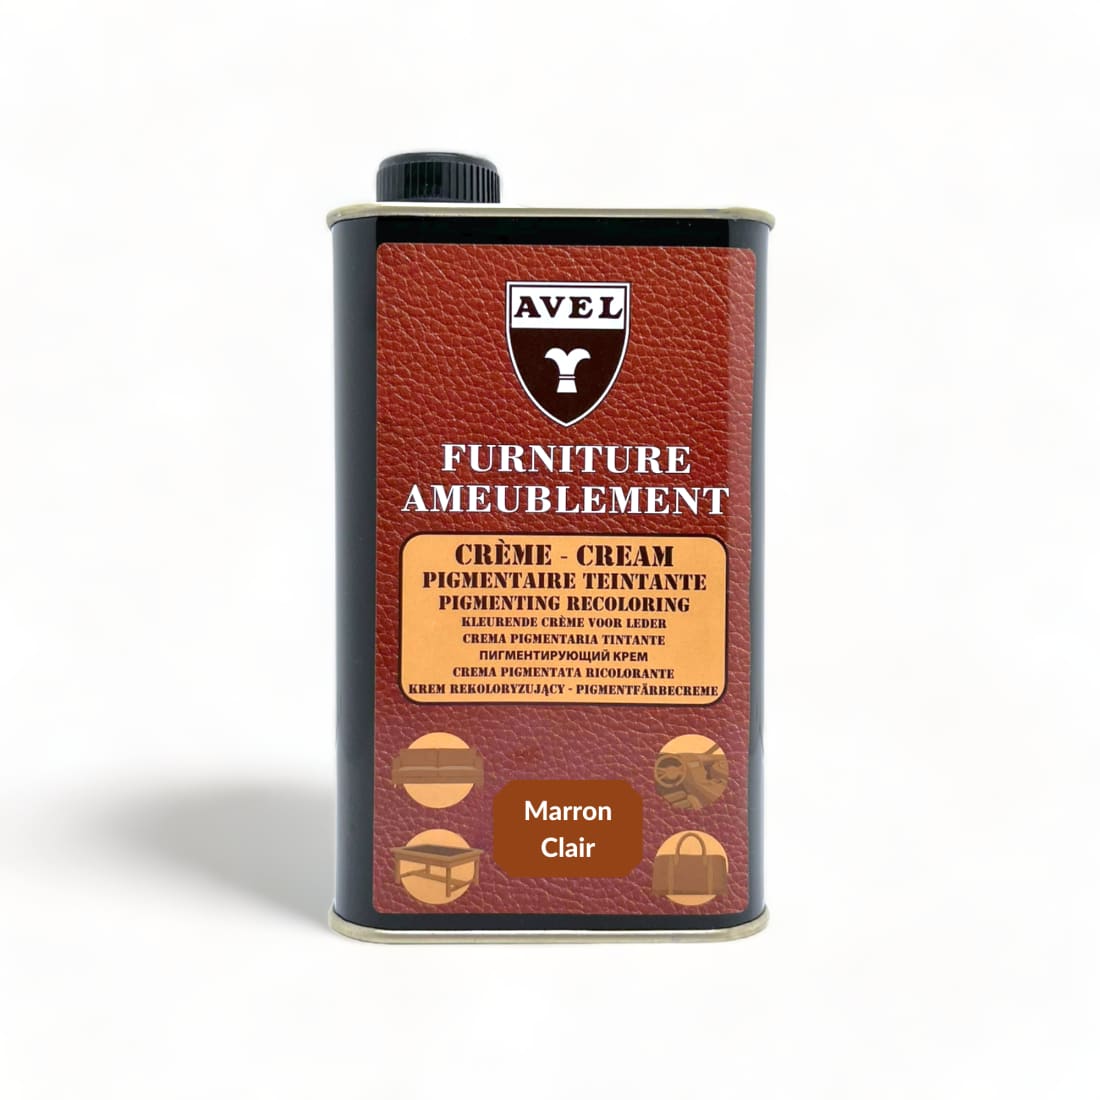 Crème Pigmentaire Teintante Marron Clair - Avel - 375 ml -